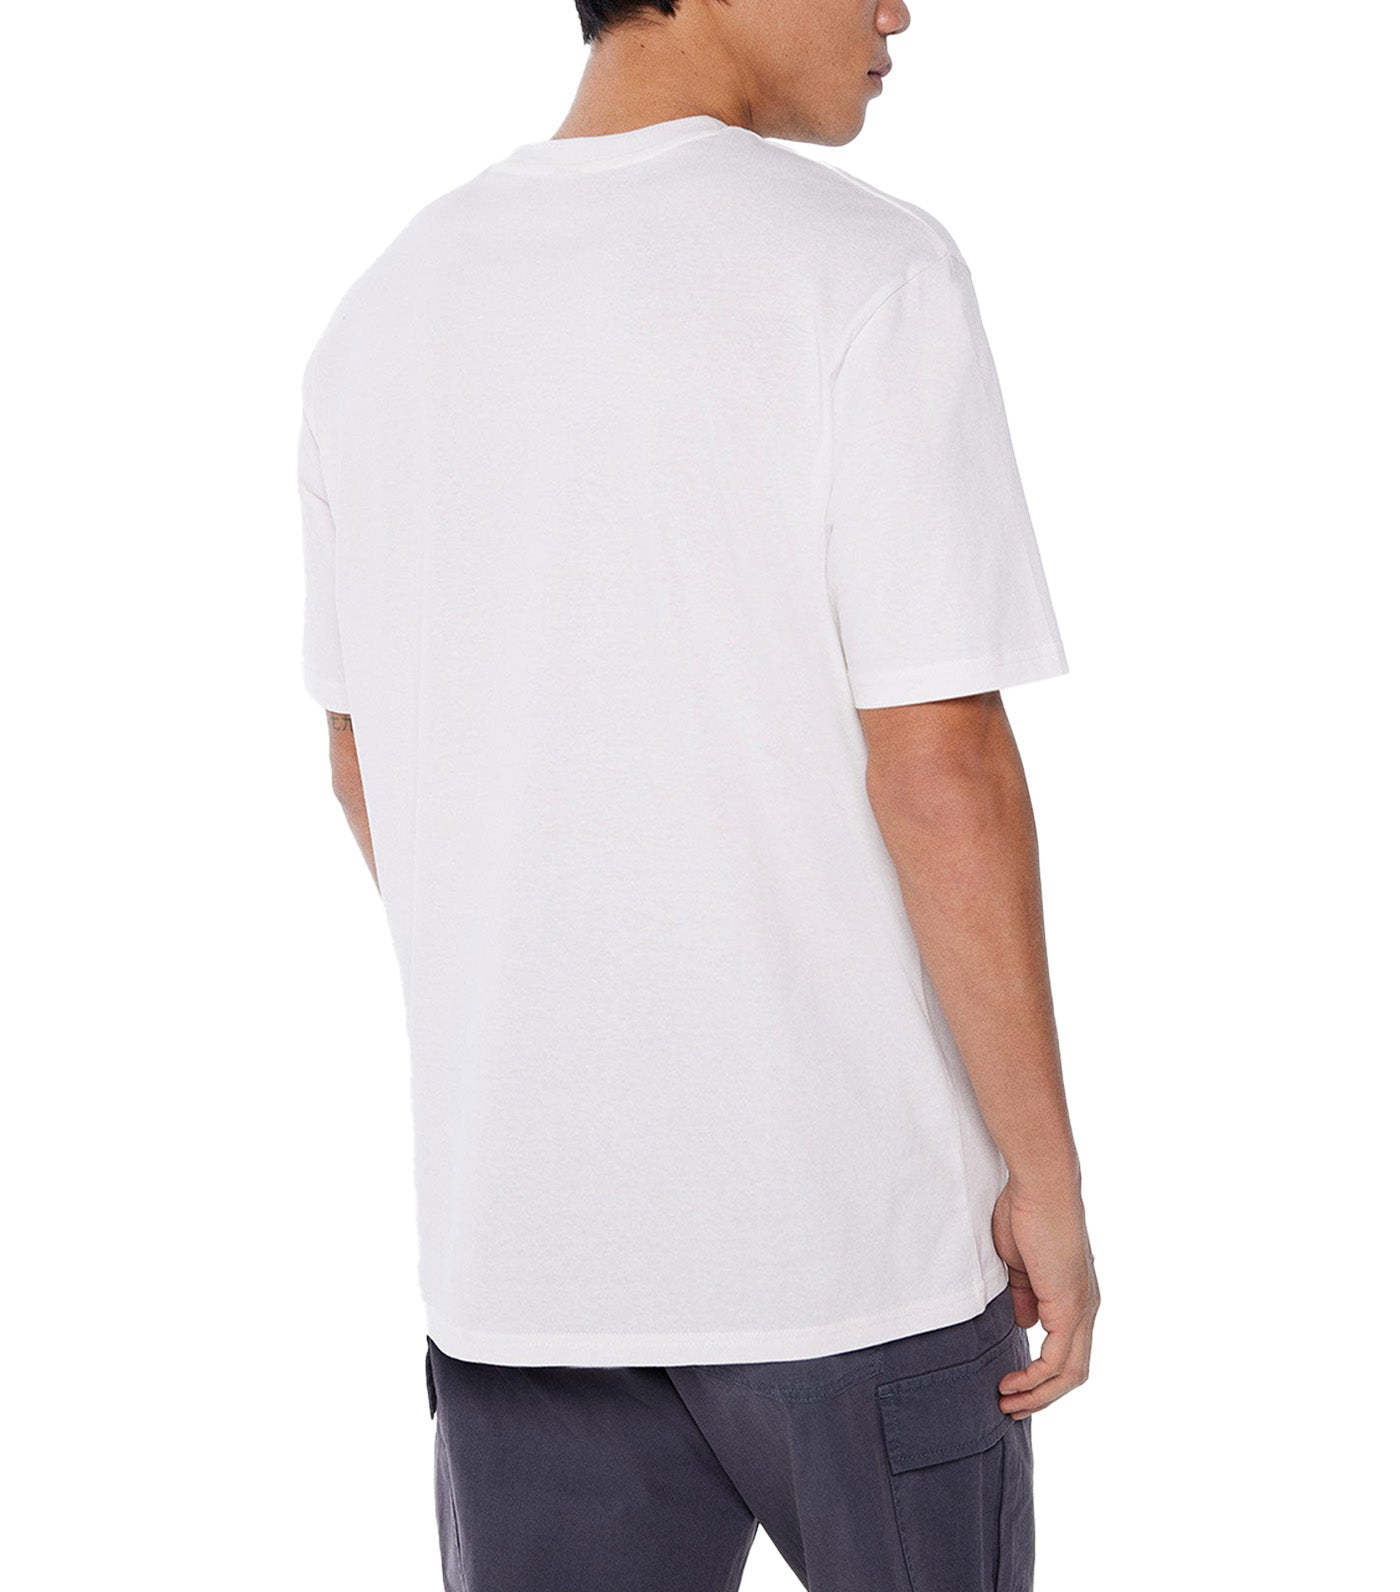 State Stronger T-Shirt White